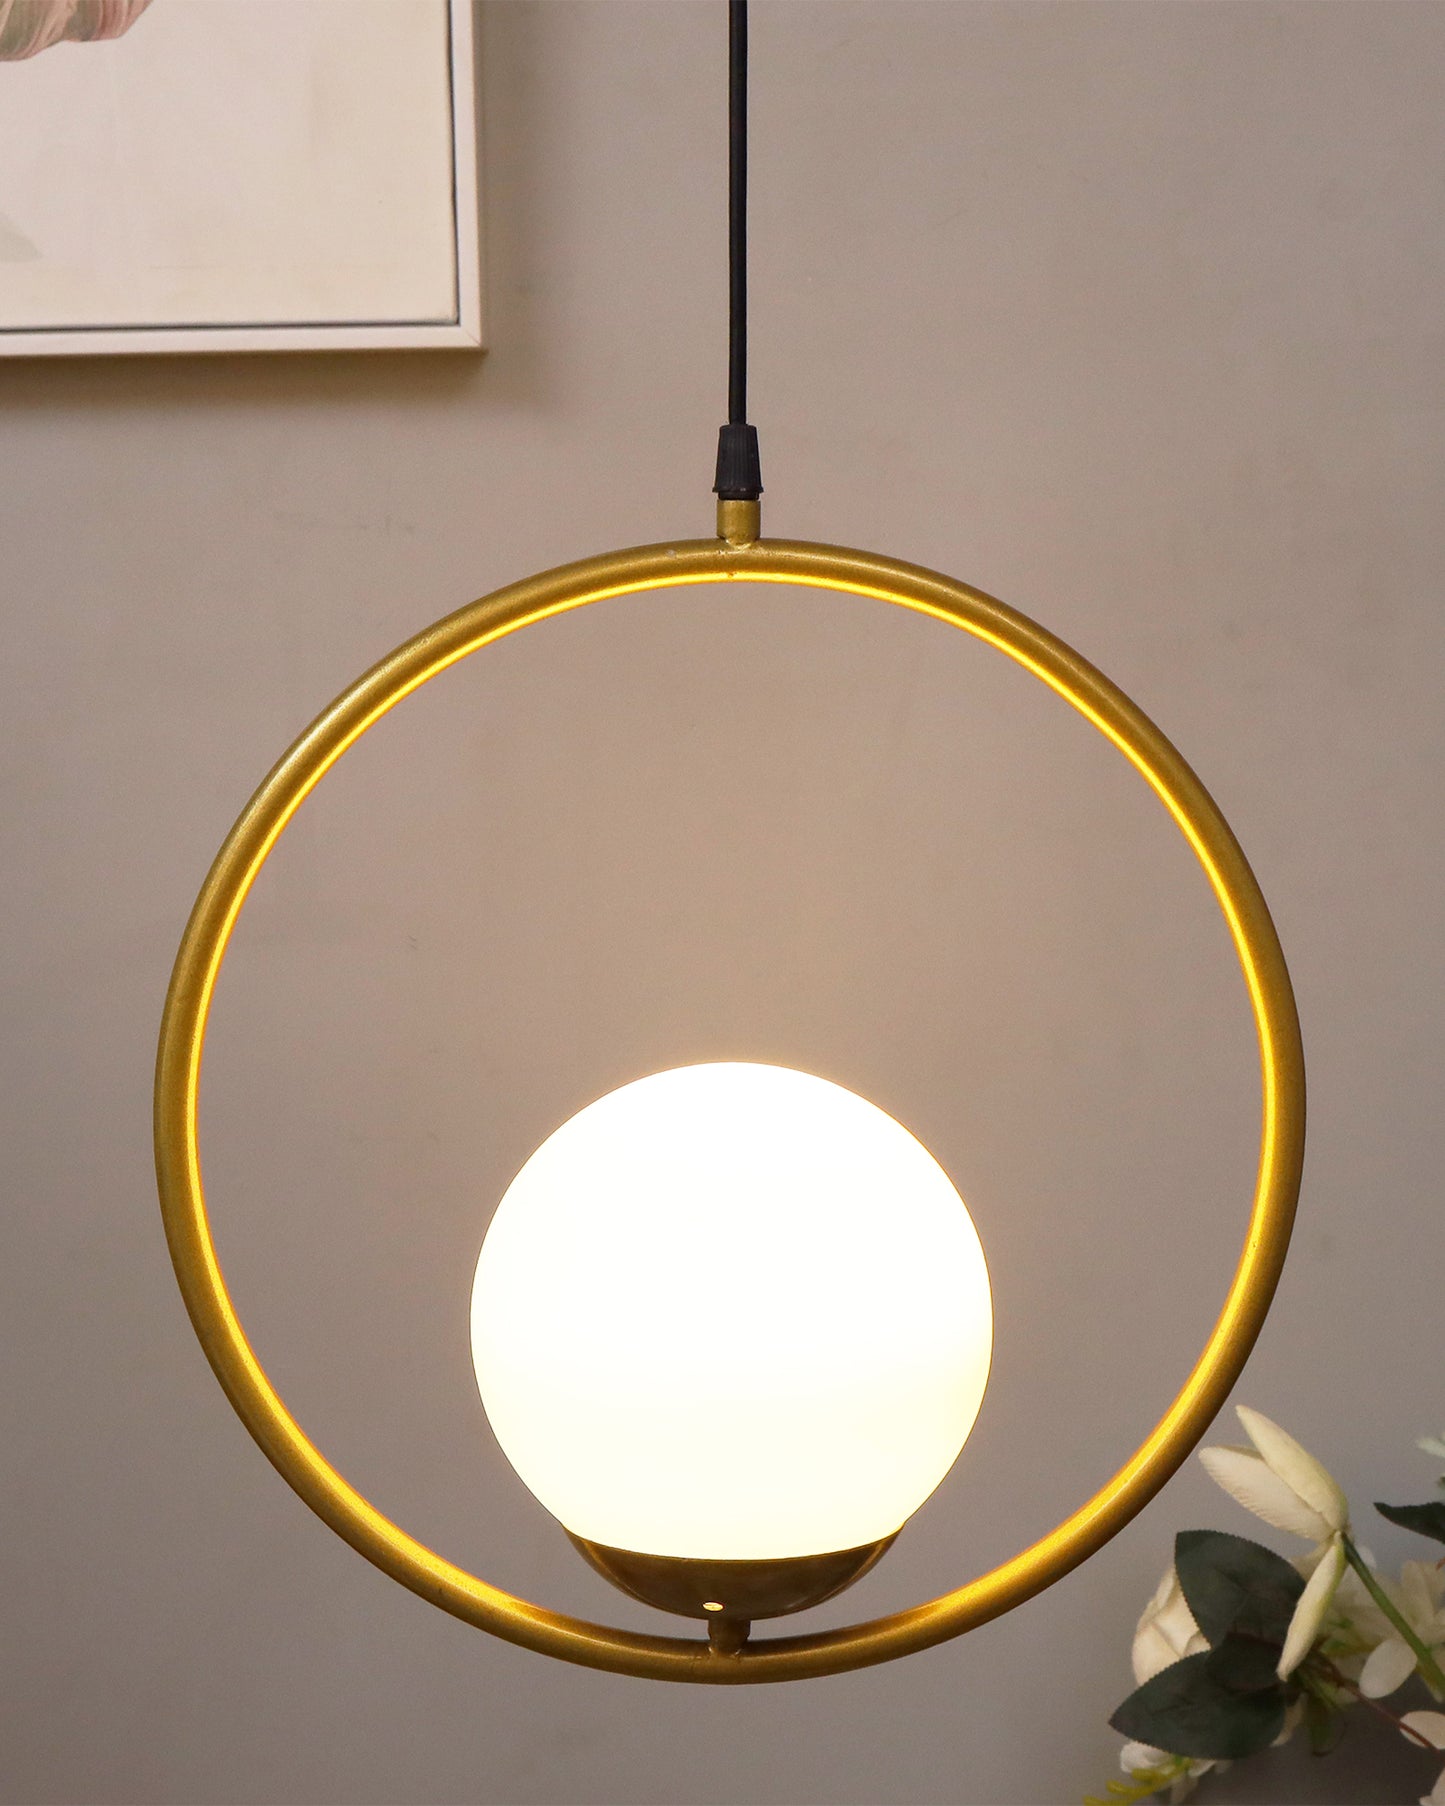 Mid Century Modern Light Chandelier Lighting, White Frosted Glass Globe Lampshade Pendant Indoor Hanging Light Fixture, Golden Round